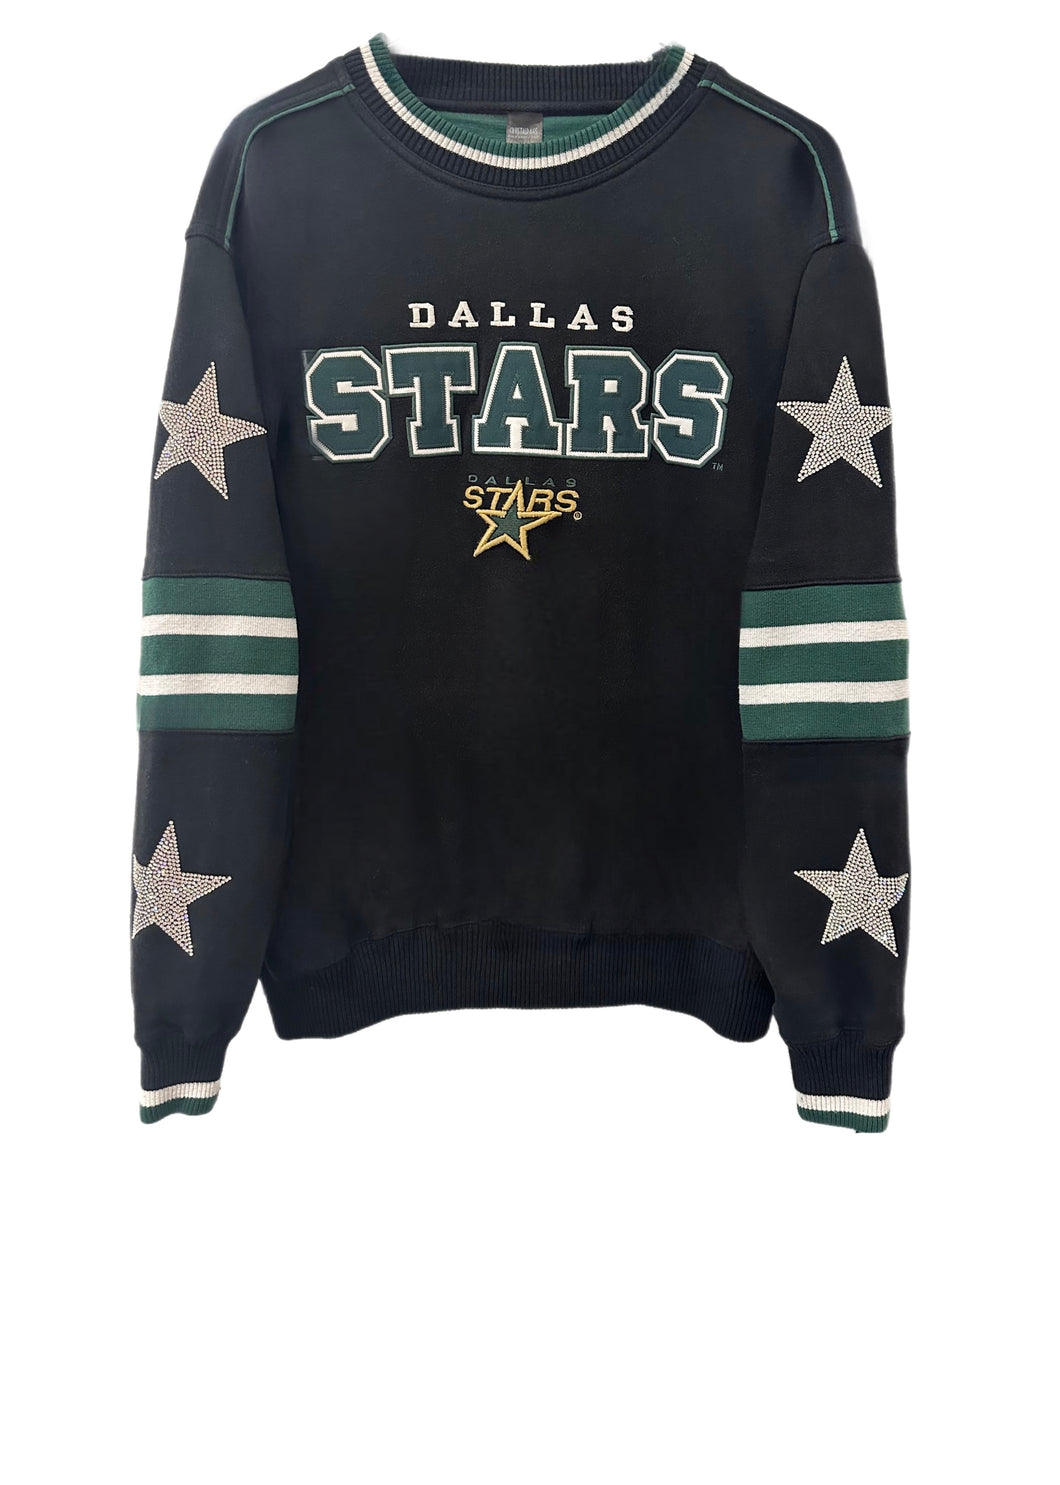 Dallas Stars, NHL One of a KIND Vintage Sweatshirt with Crystal Stars Design, Custom Name + Number